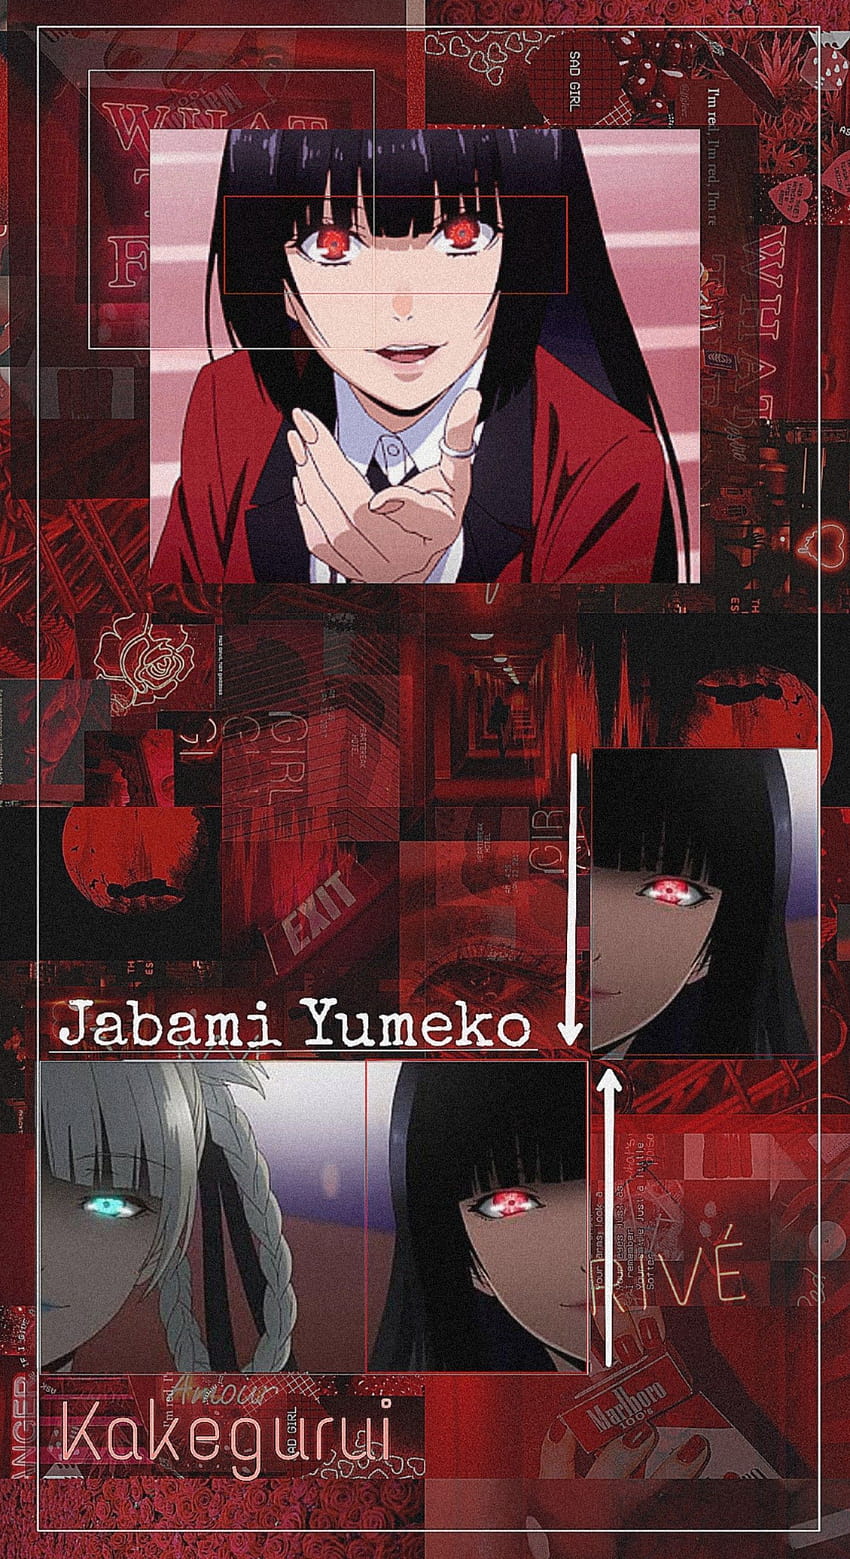 Jabami Yumeko - Kakegurui - Wallpaper by Tomari #2447644 - Zerochan Anime  Image Board